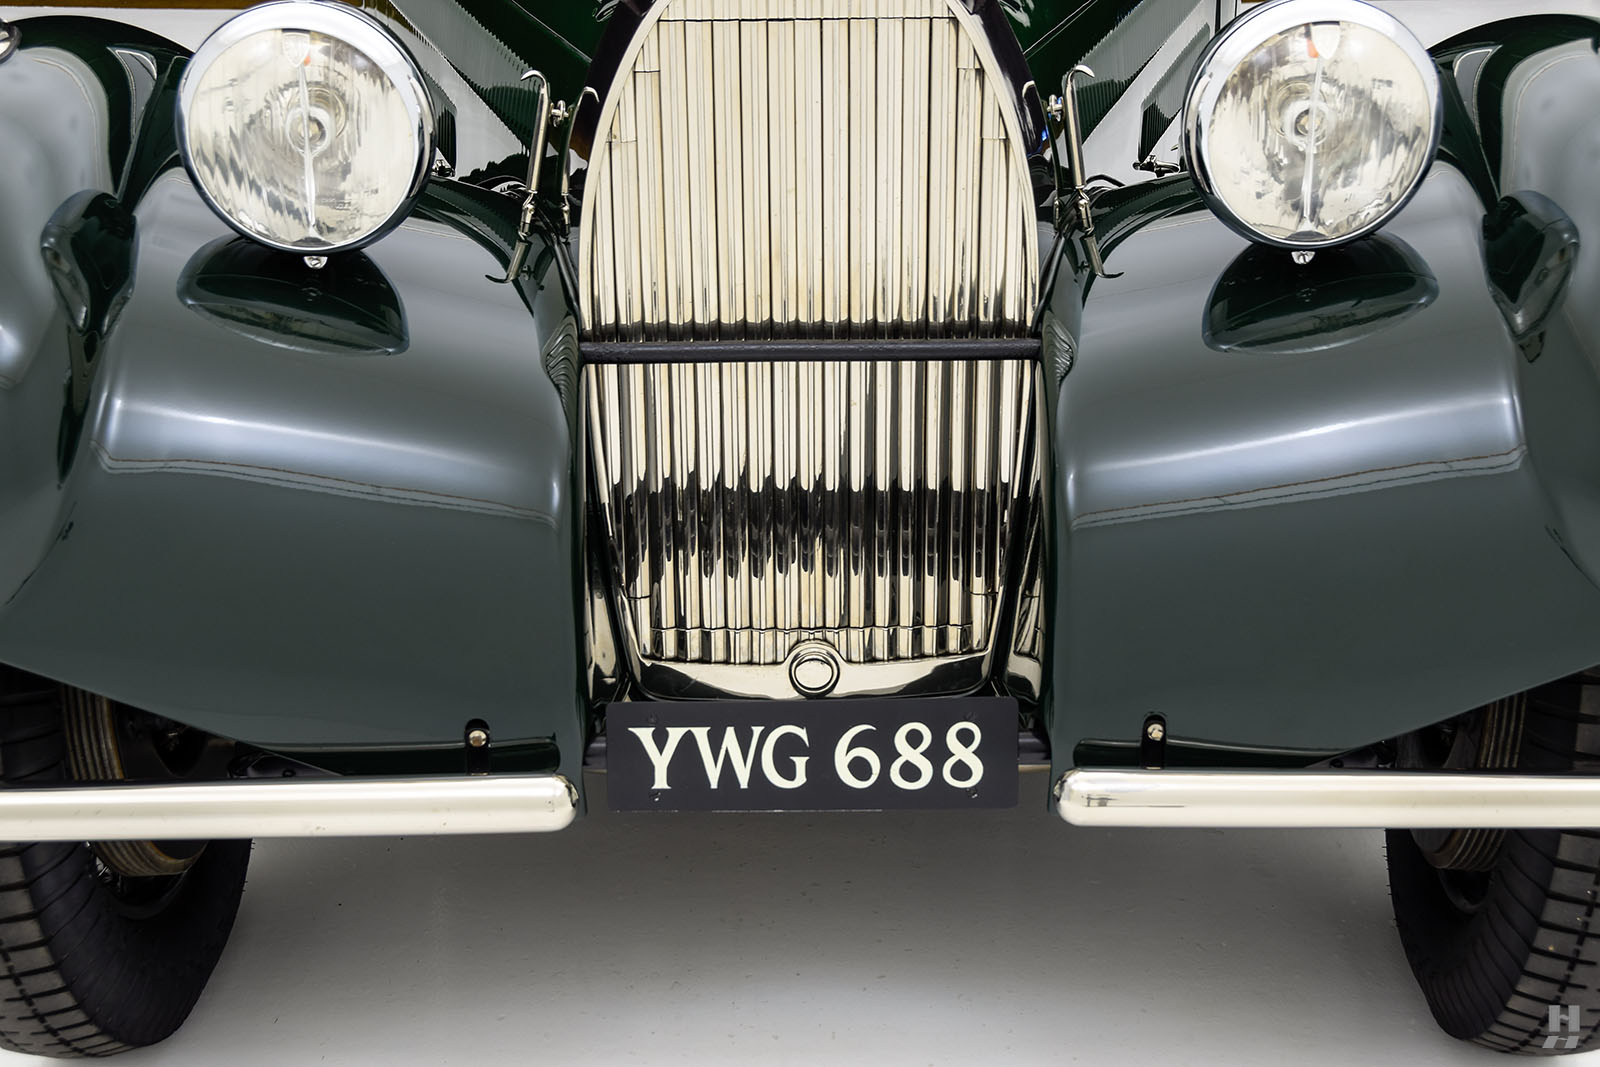 1935 bugatti type 57 galibier